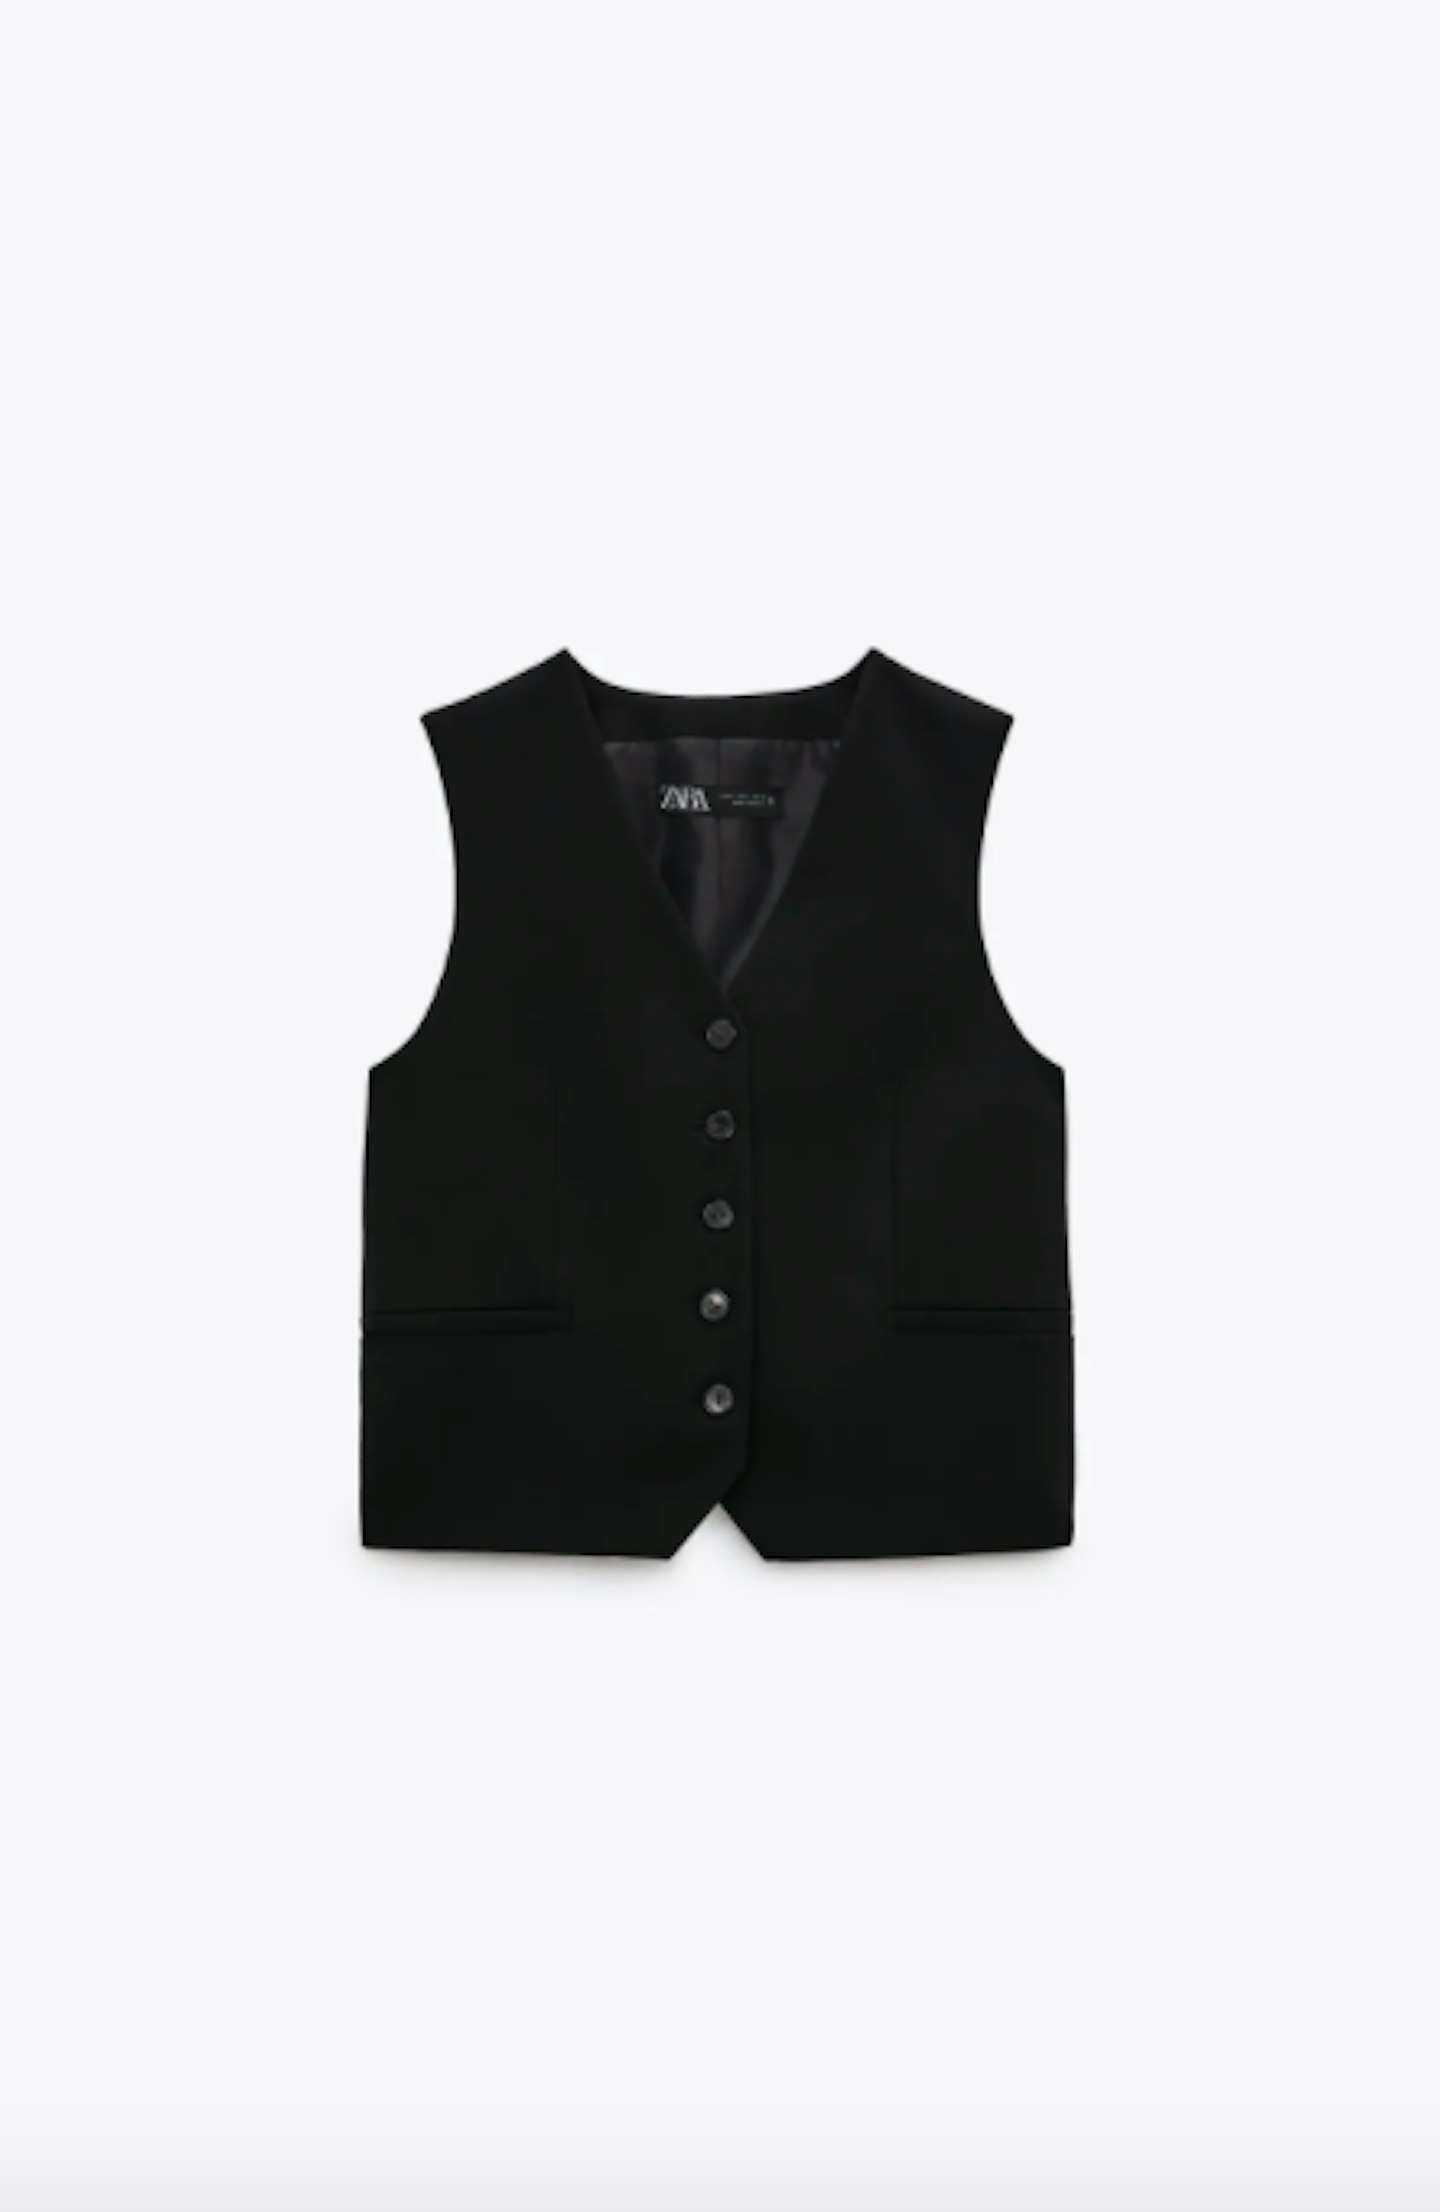 Zara, Buttoned Waistcoat, £27.99